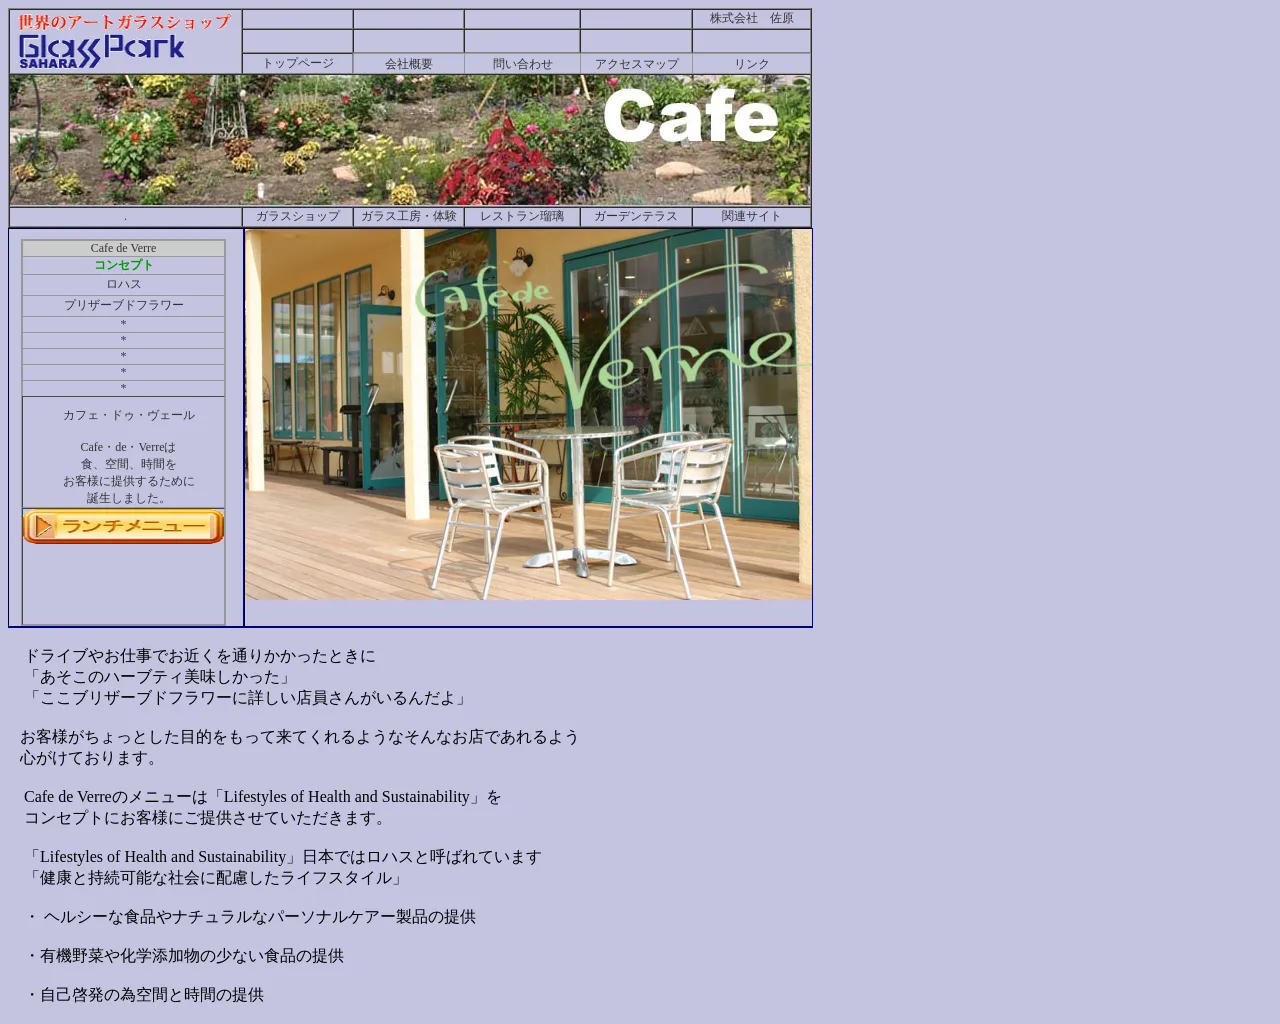 Cafe de Verre site